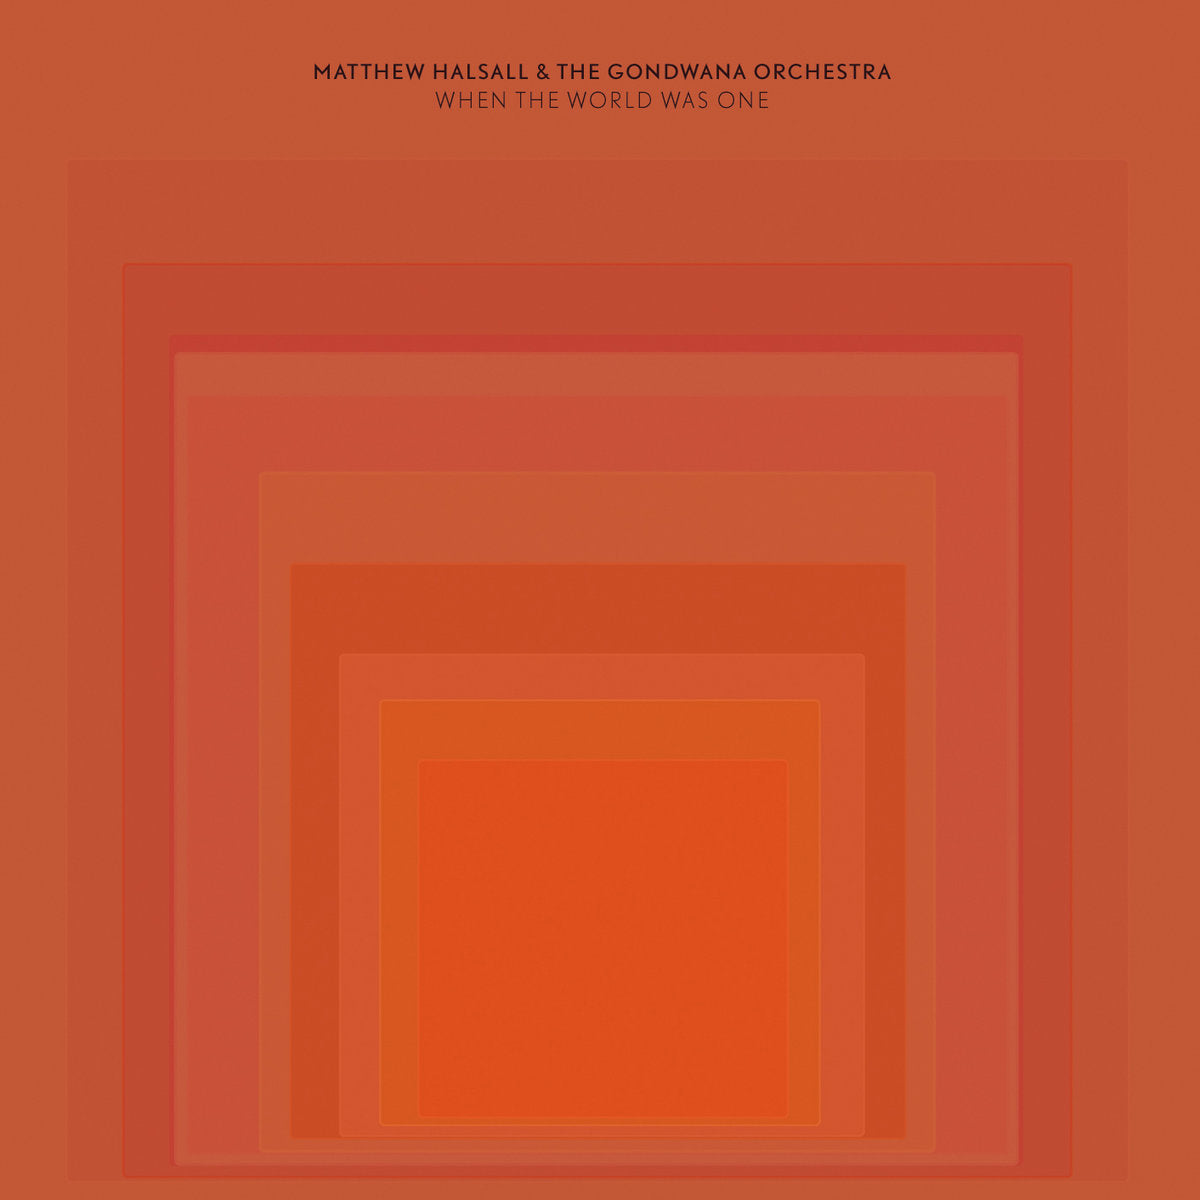 Matthew Halsall & The Gondwana Orquestra - When the World Was One